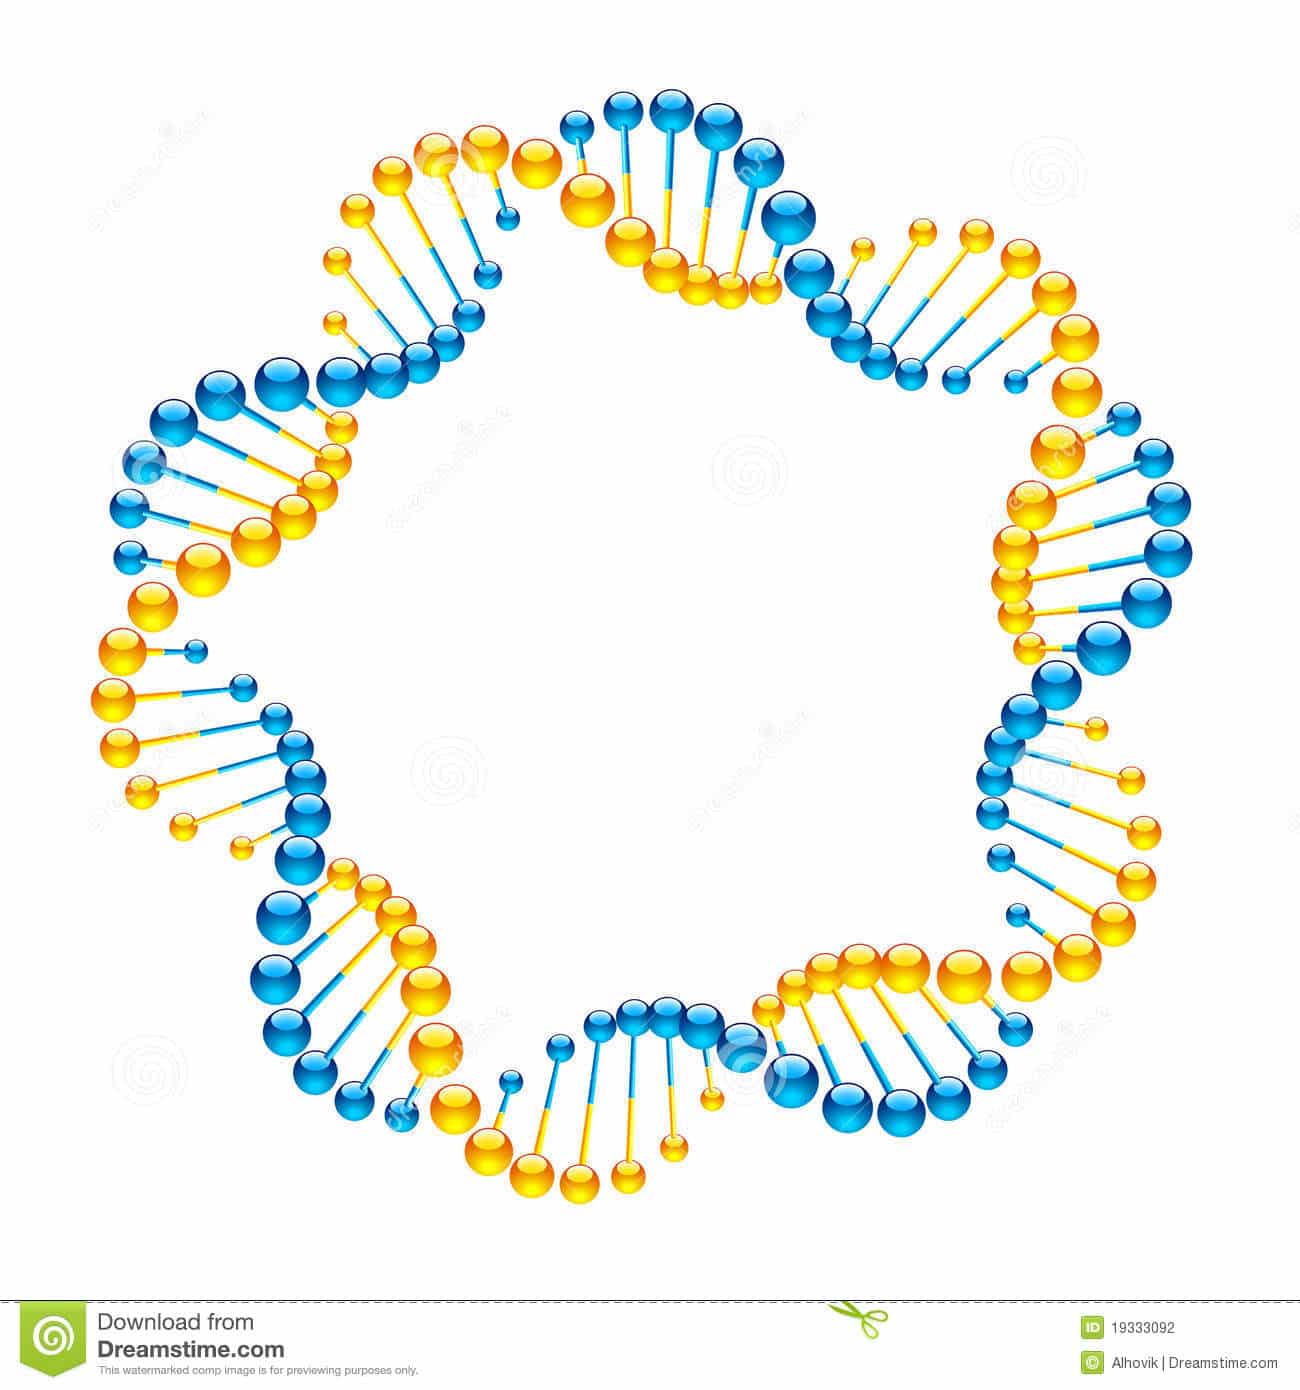 DNA Strands stock vector. Illustration of atom, helix